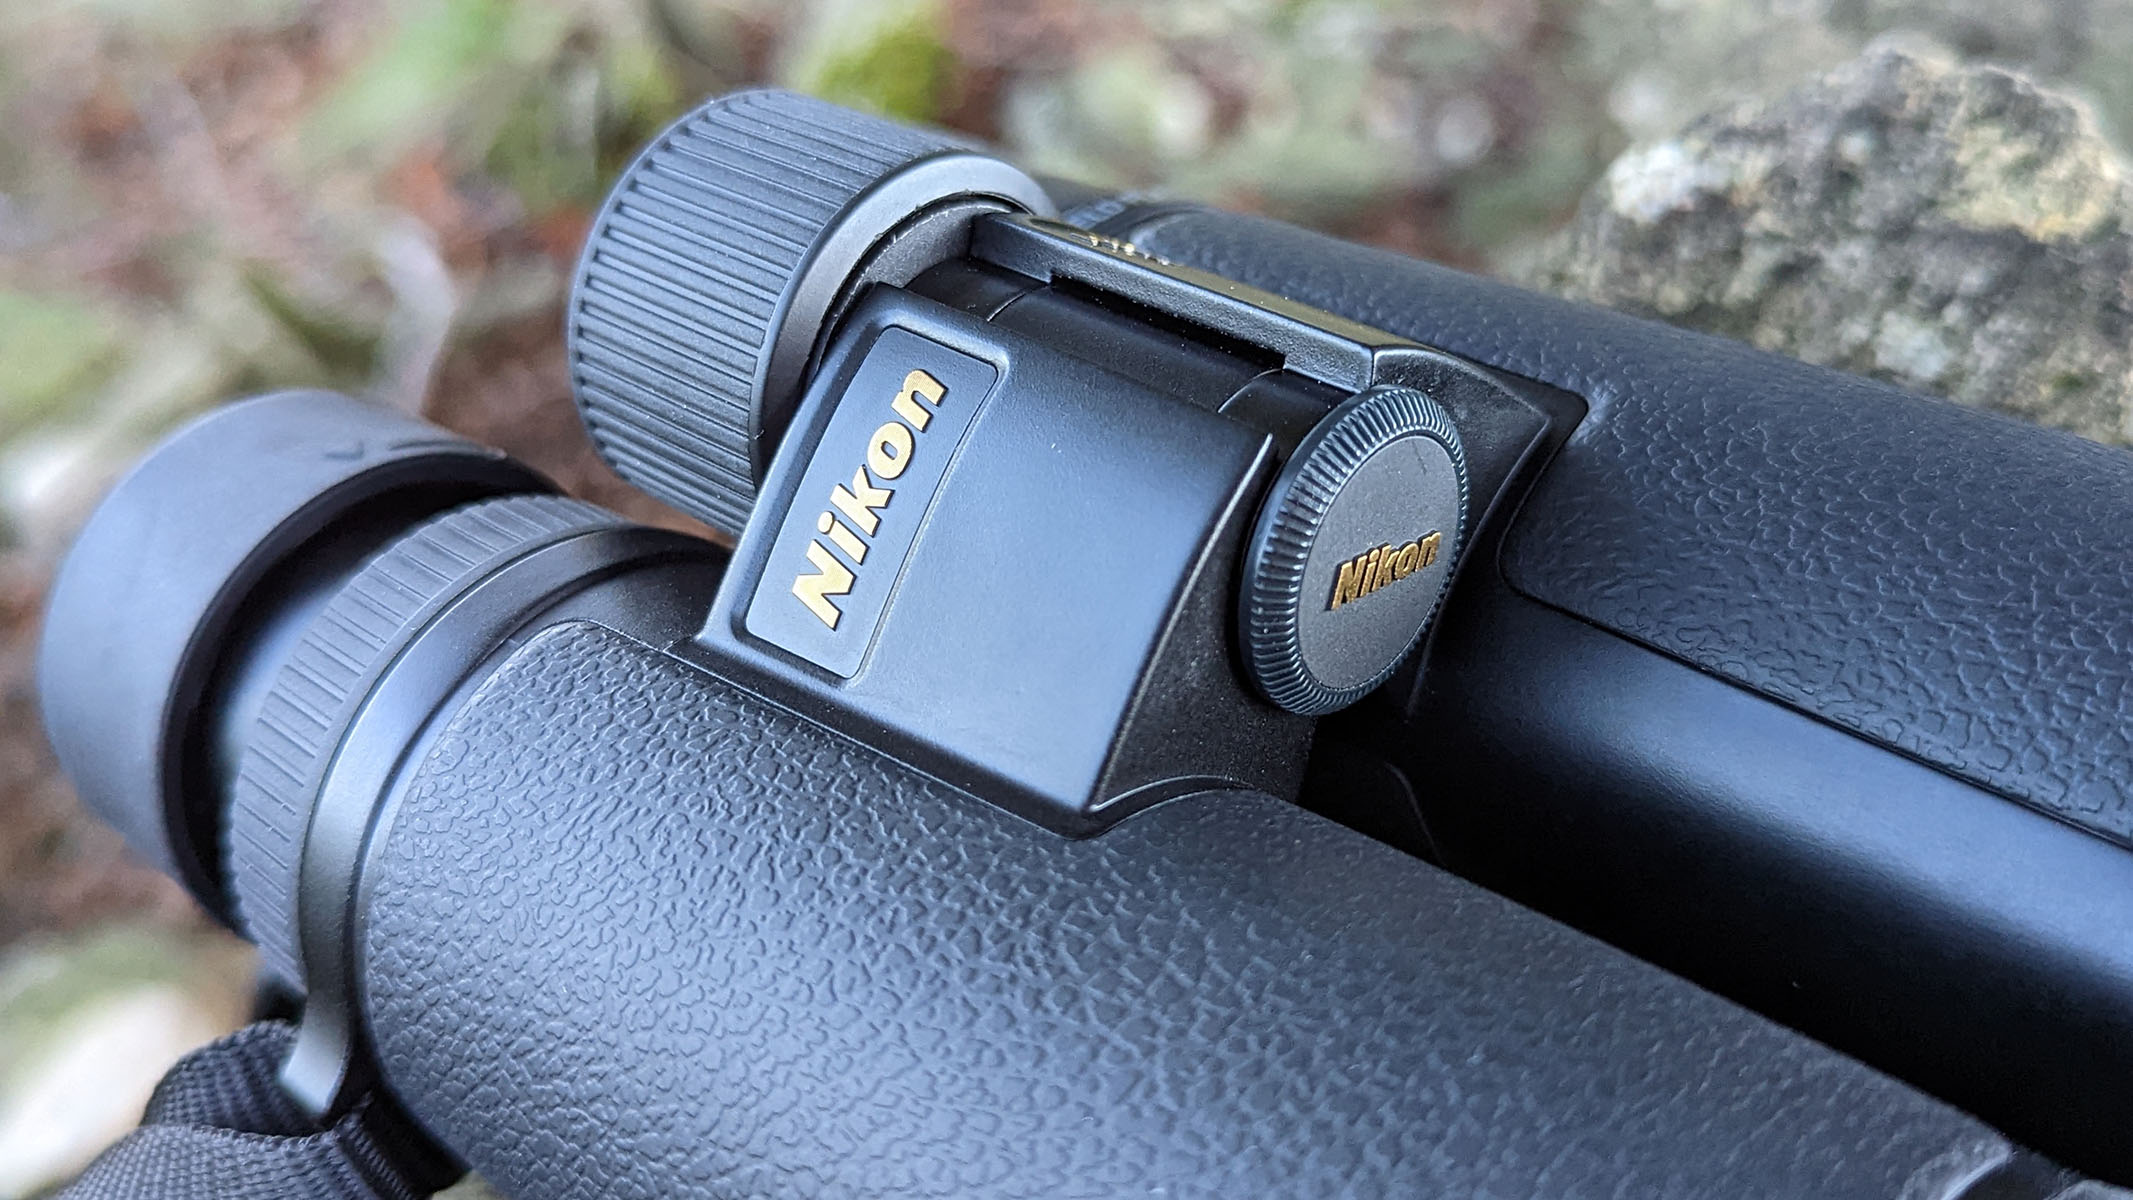 A close up view of the Nikon Monarch HG 10x42 binocular hinge